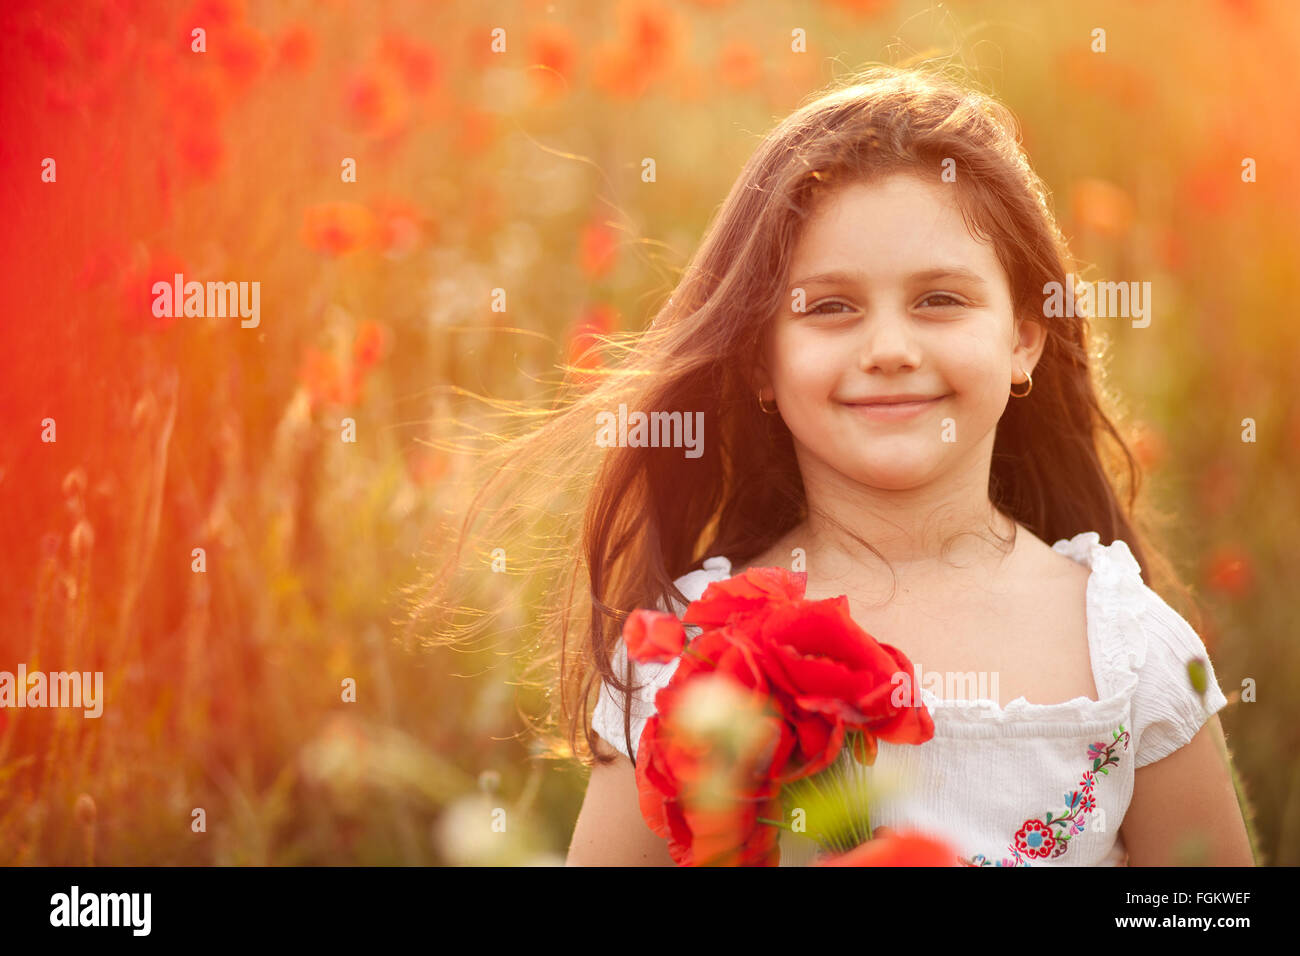 Happy girl with poppies. Stock Photo